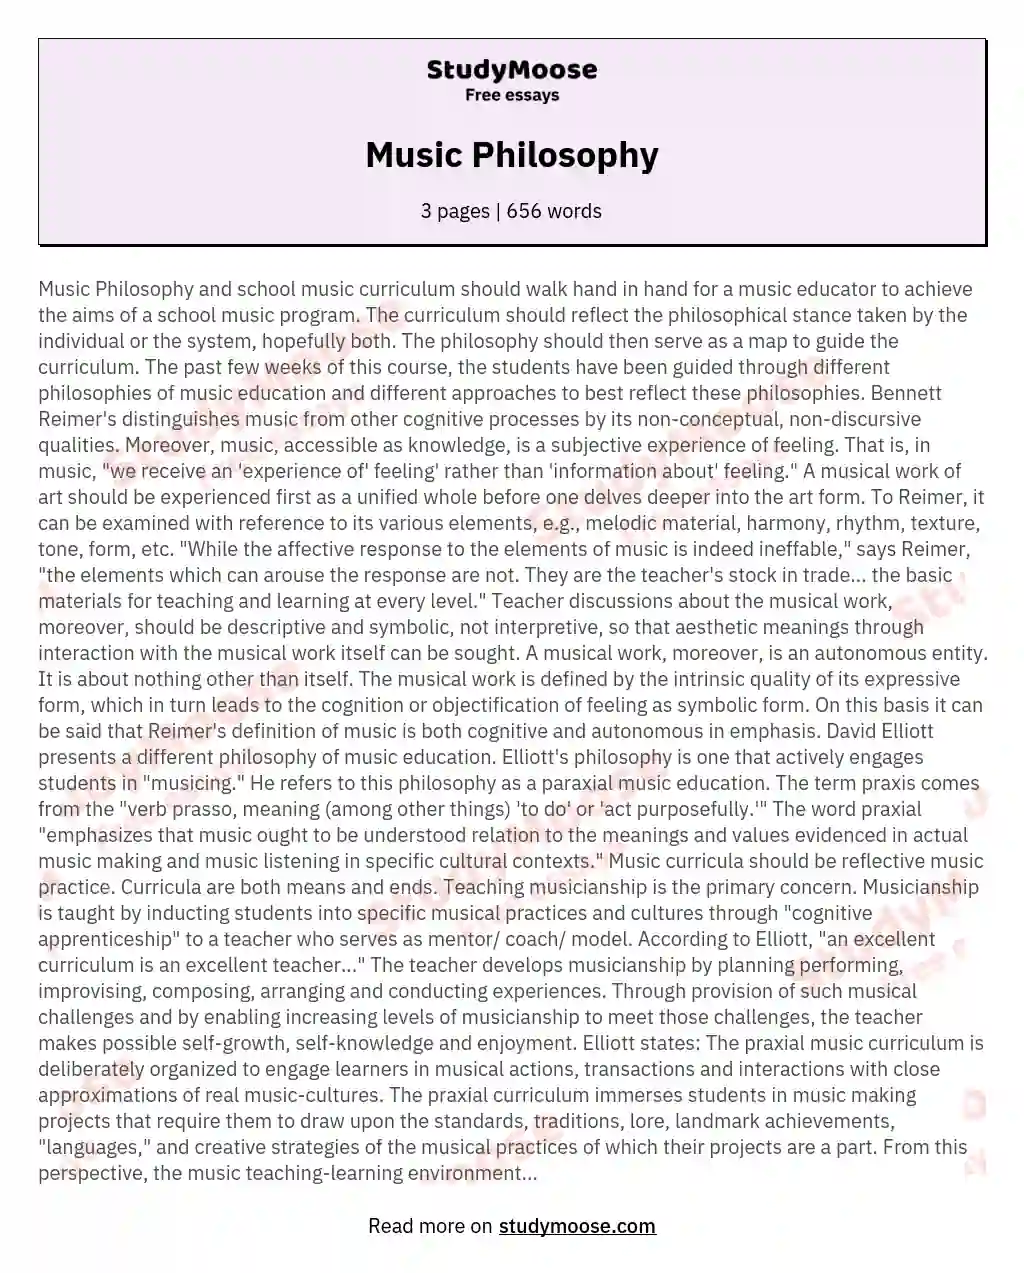 Music Philosophy essay